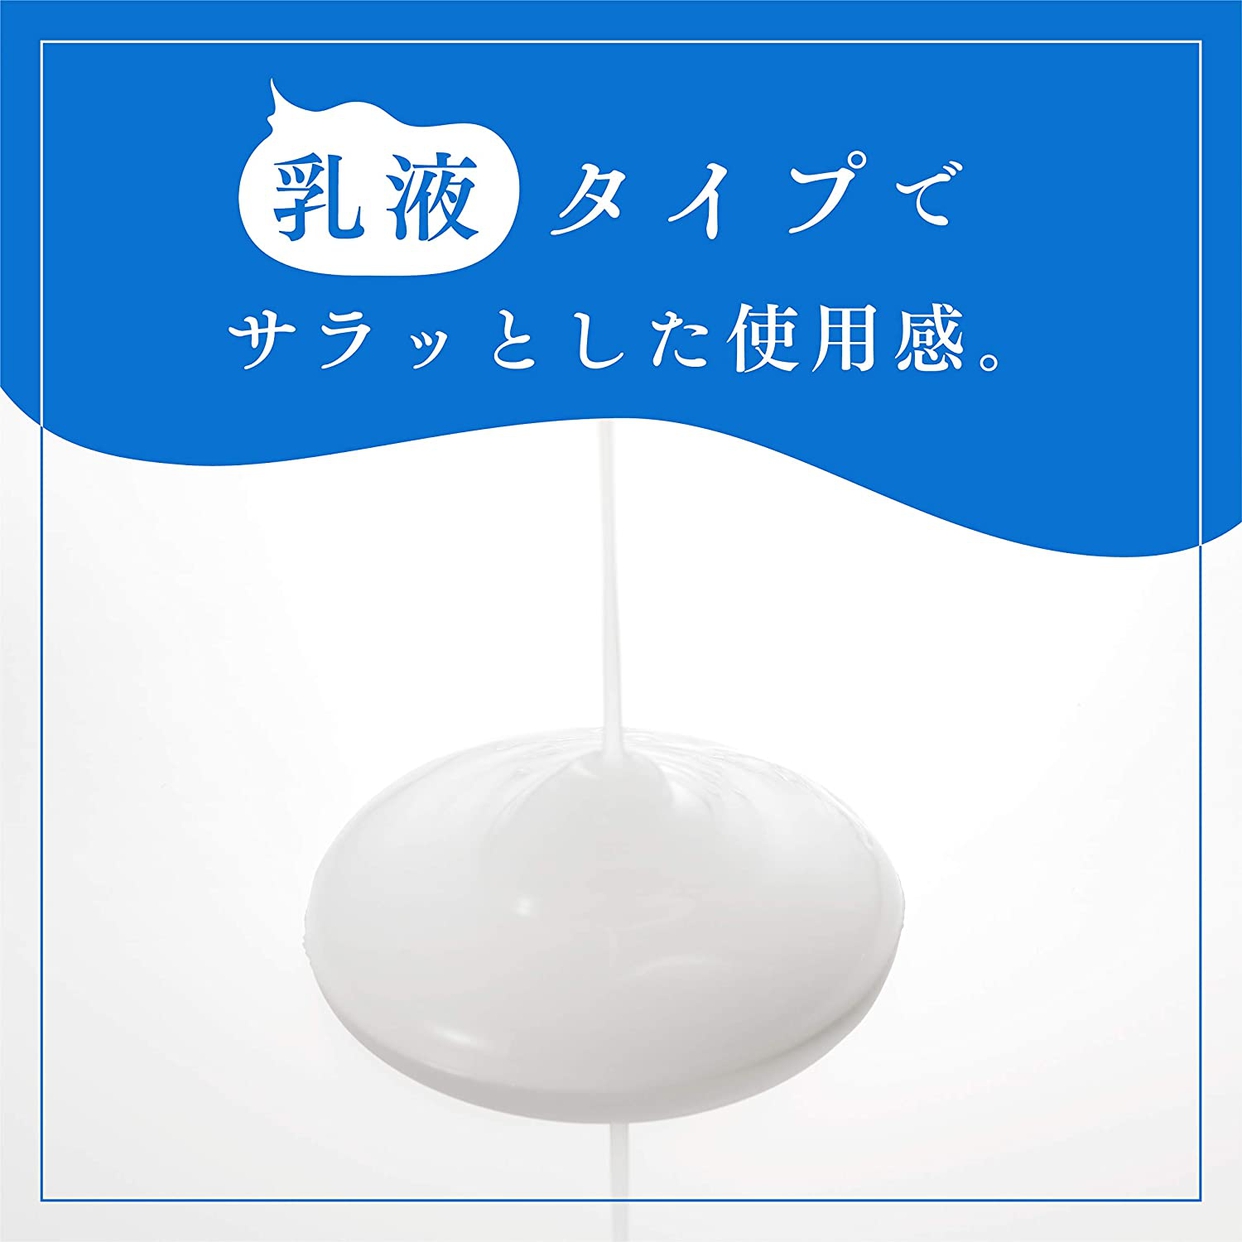 Pure-ria(ピュアリア) うるおいin手肌すっきり洗浄乳液の商品画像6 